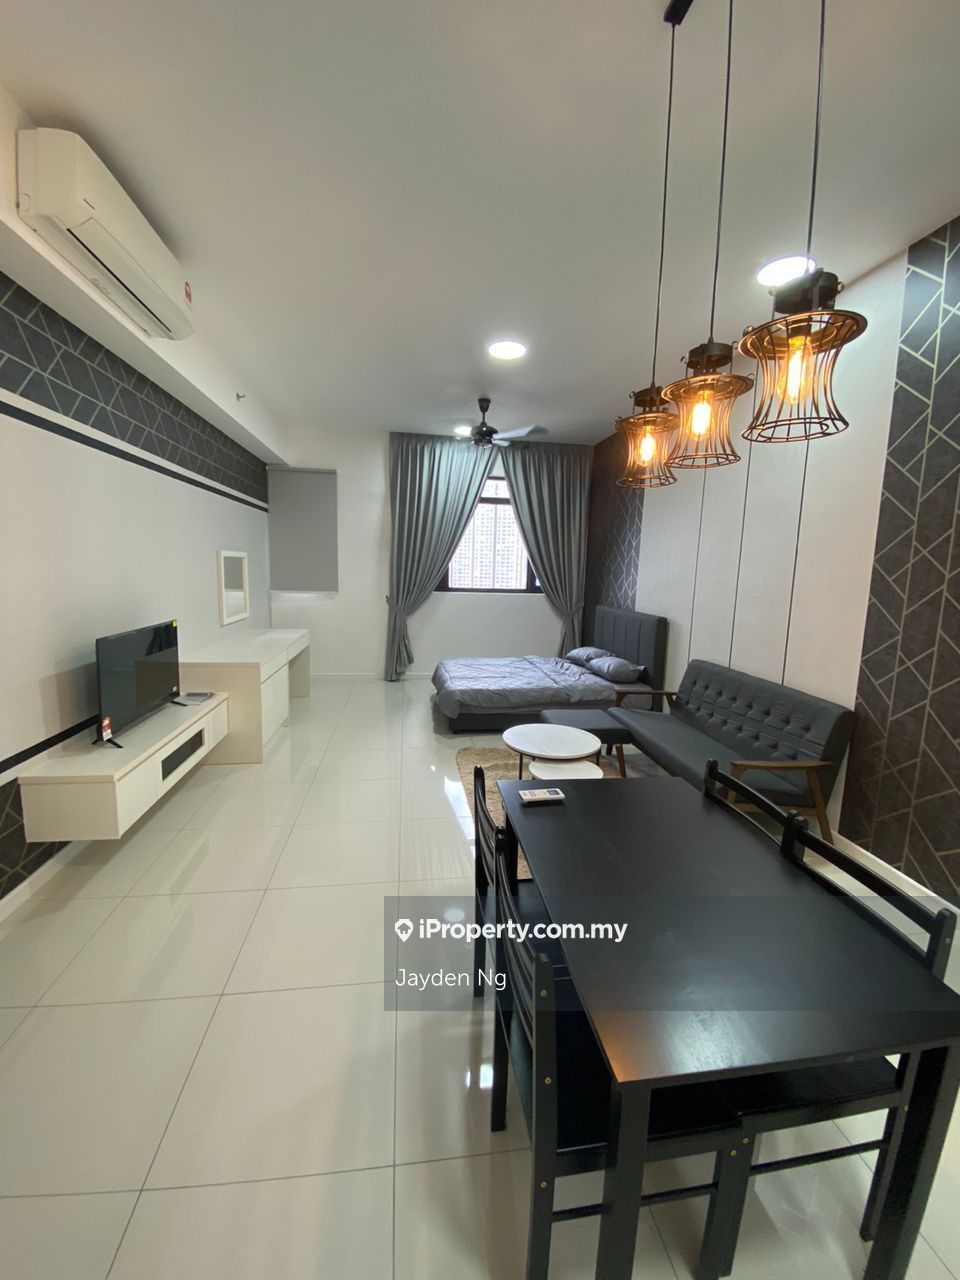 Chambers Intermediate Serviced Residence for rent in KLCC, Kuala Lumpur ...